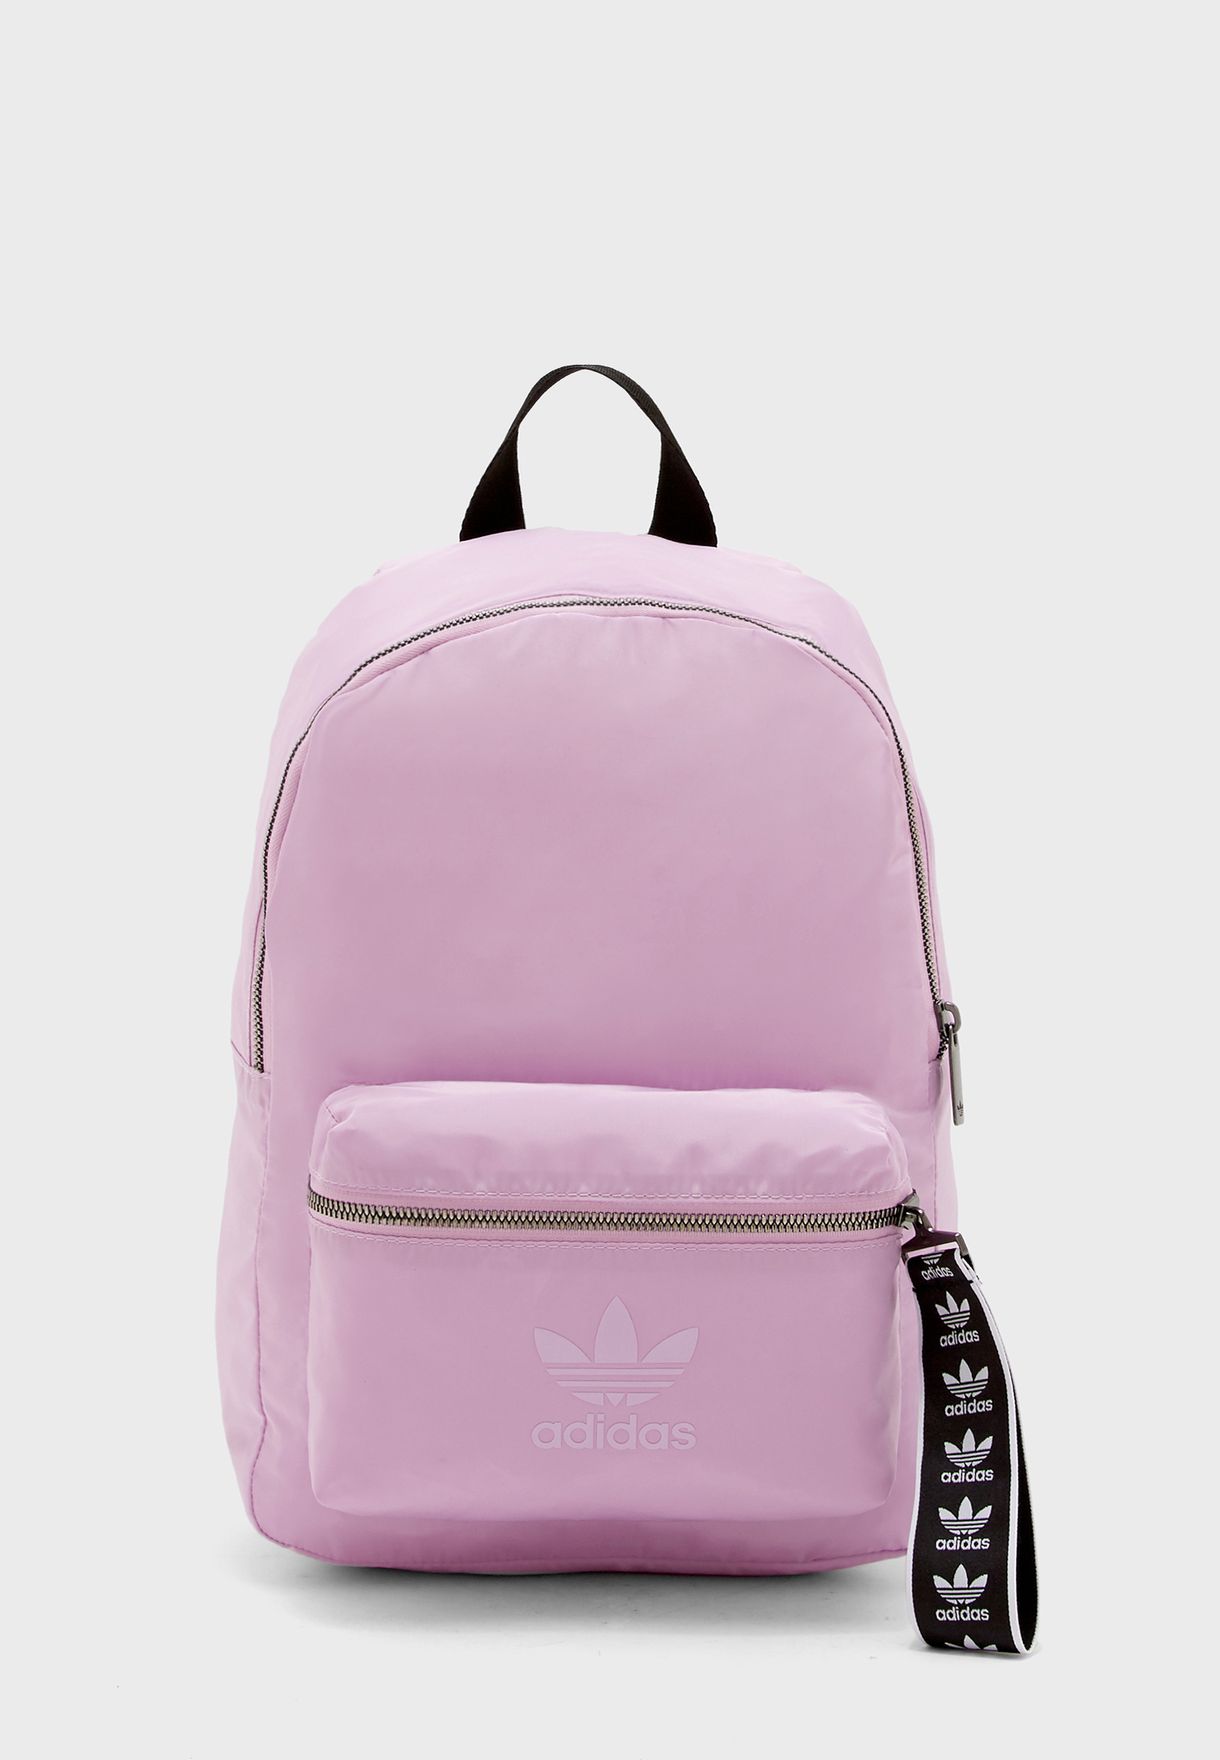 adidas backpack women